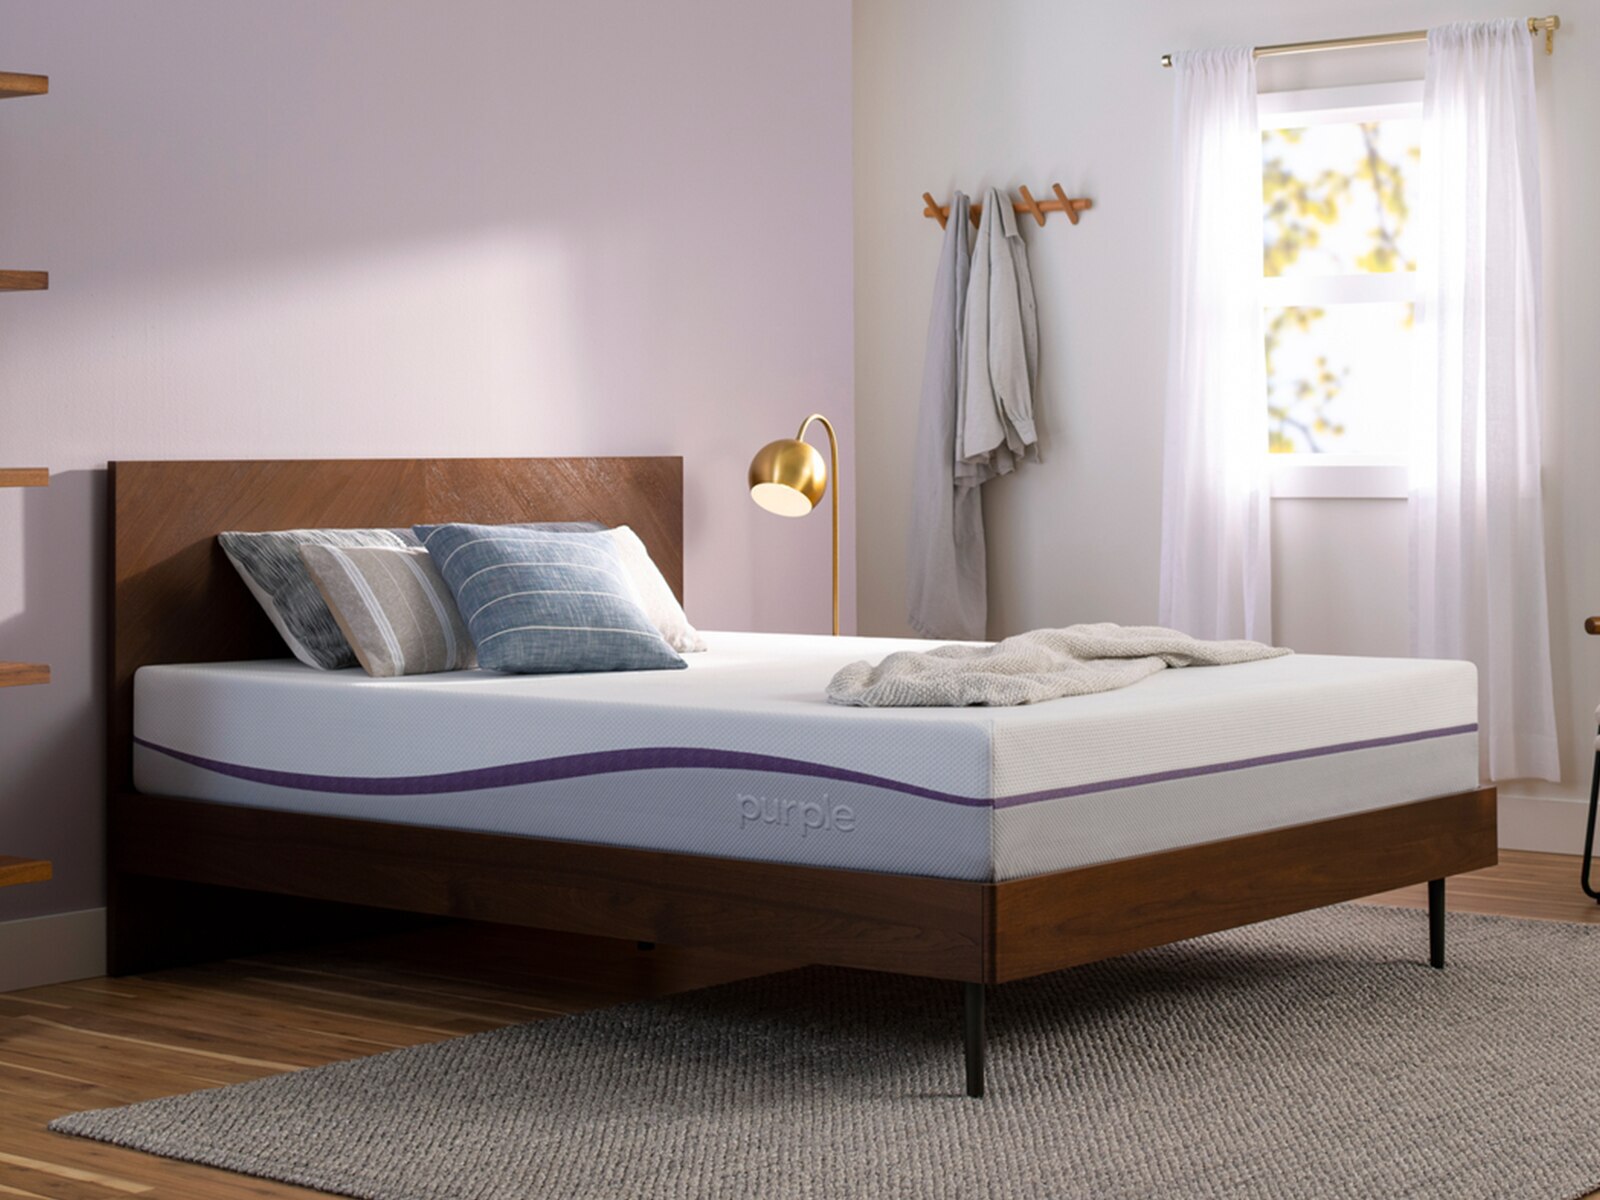 purple mattress comfort grid